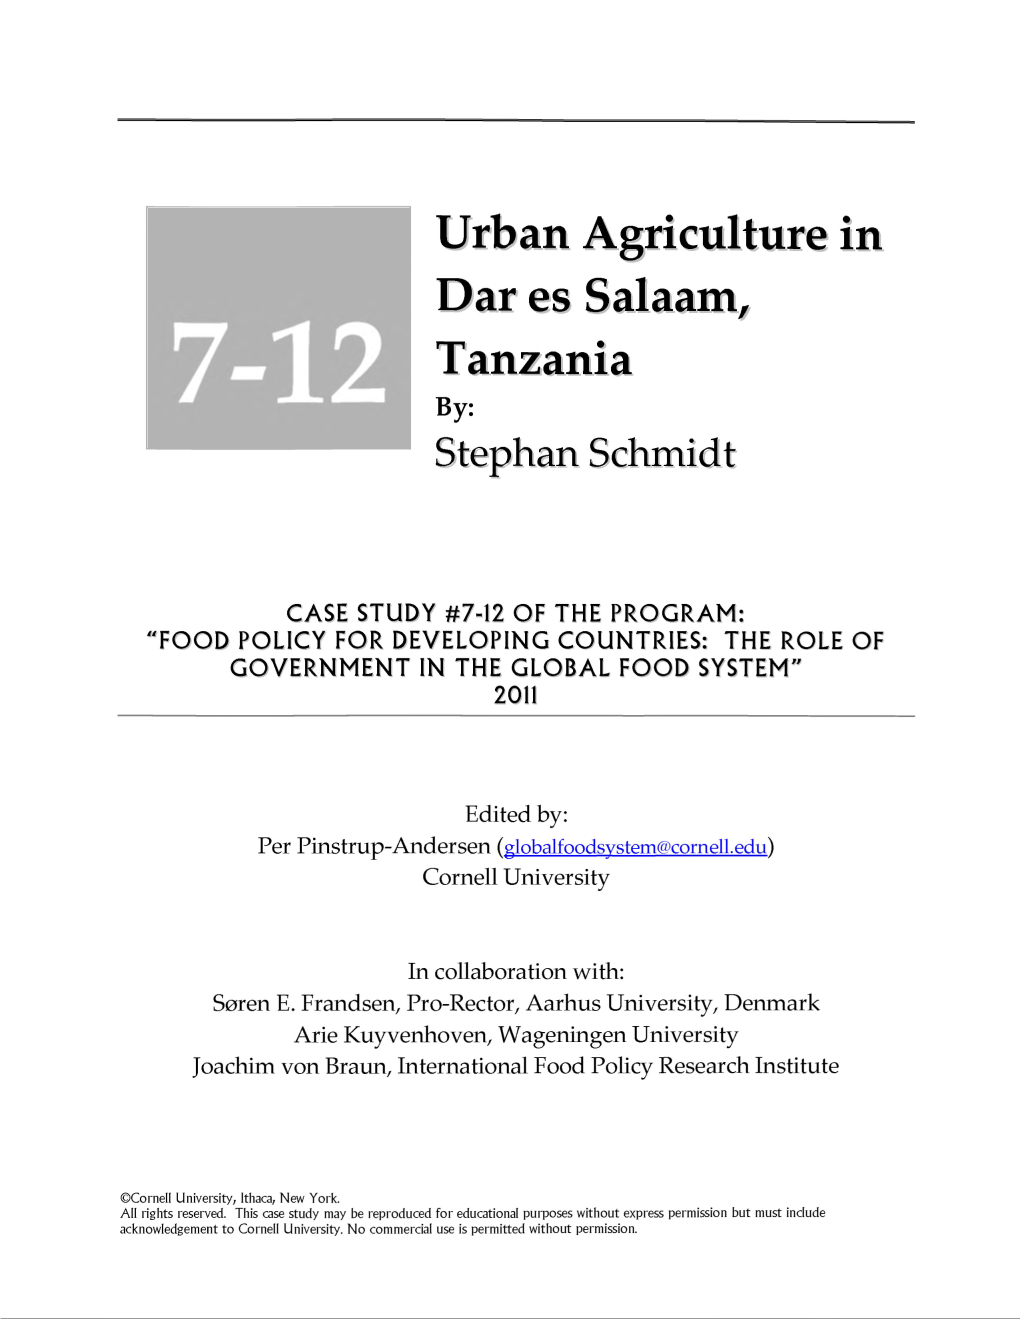 Urban Agriculture in Dar Es Salaam, T Anzania By: Stephan Schmidt